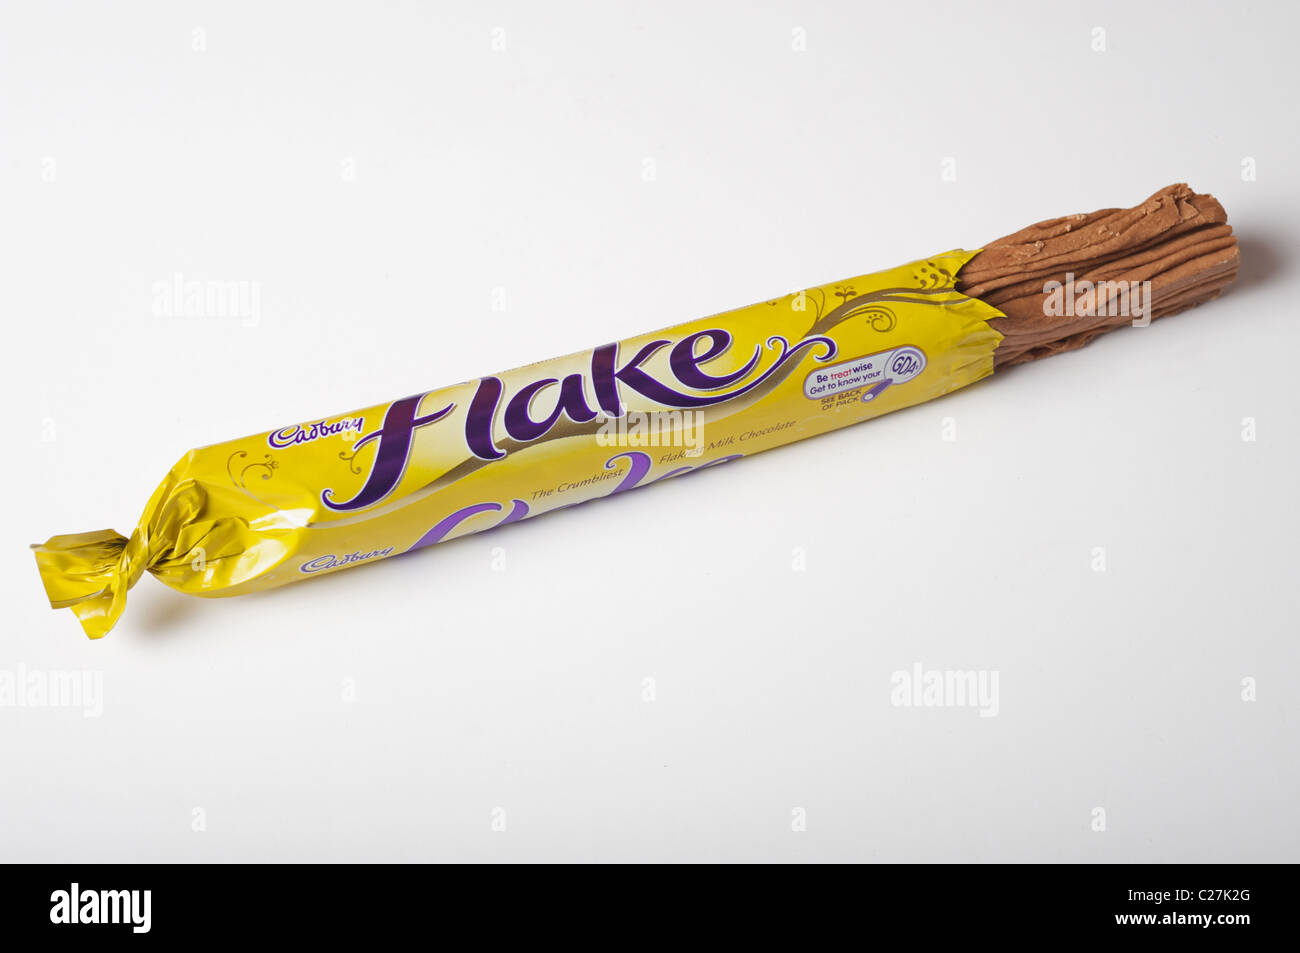 Cadbury Flake Luxury